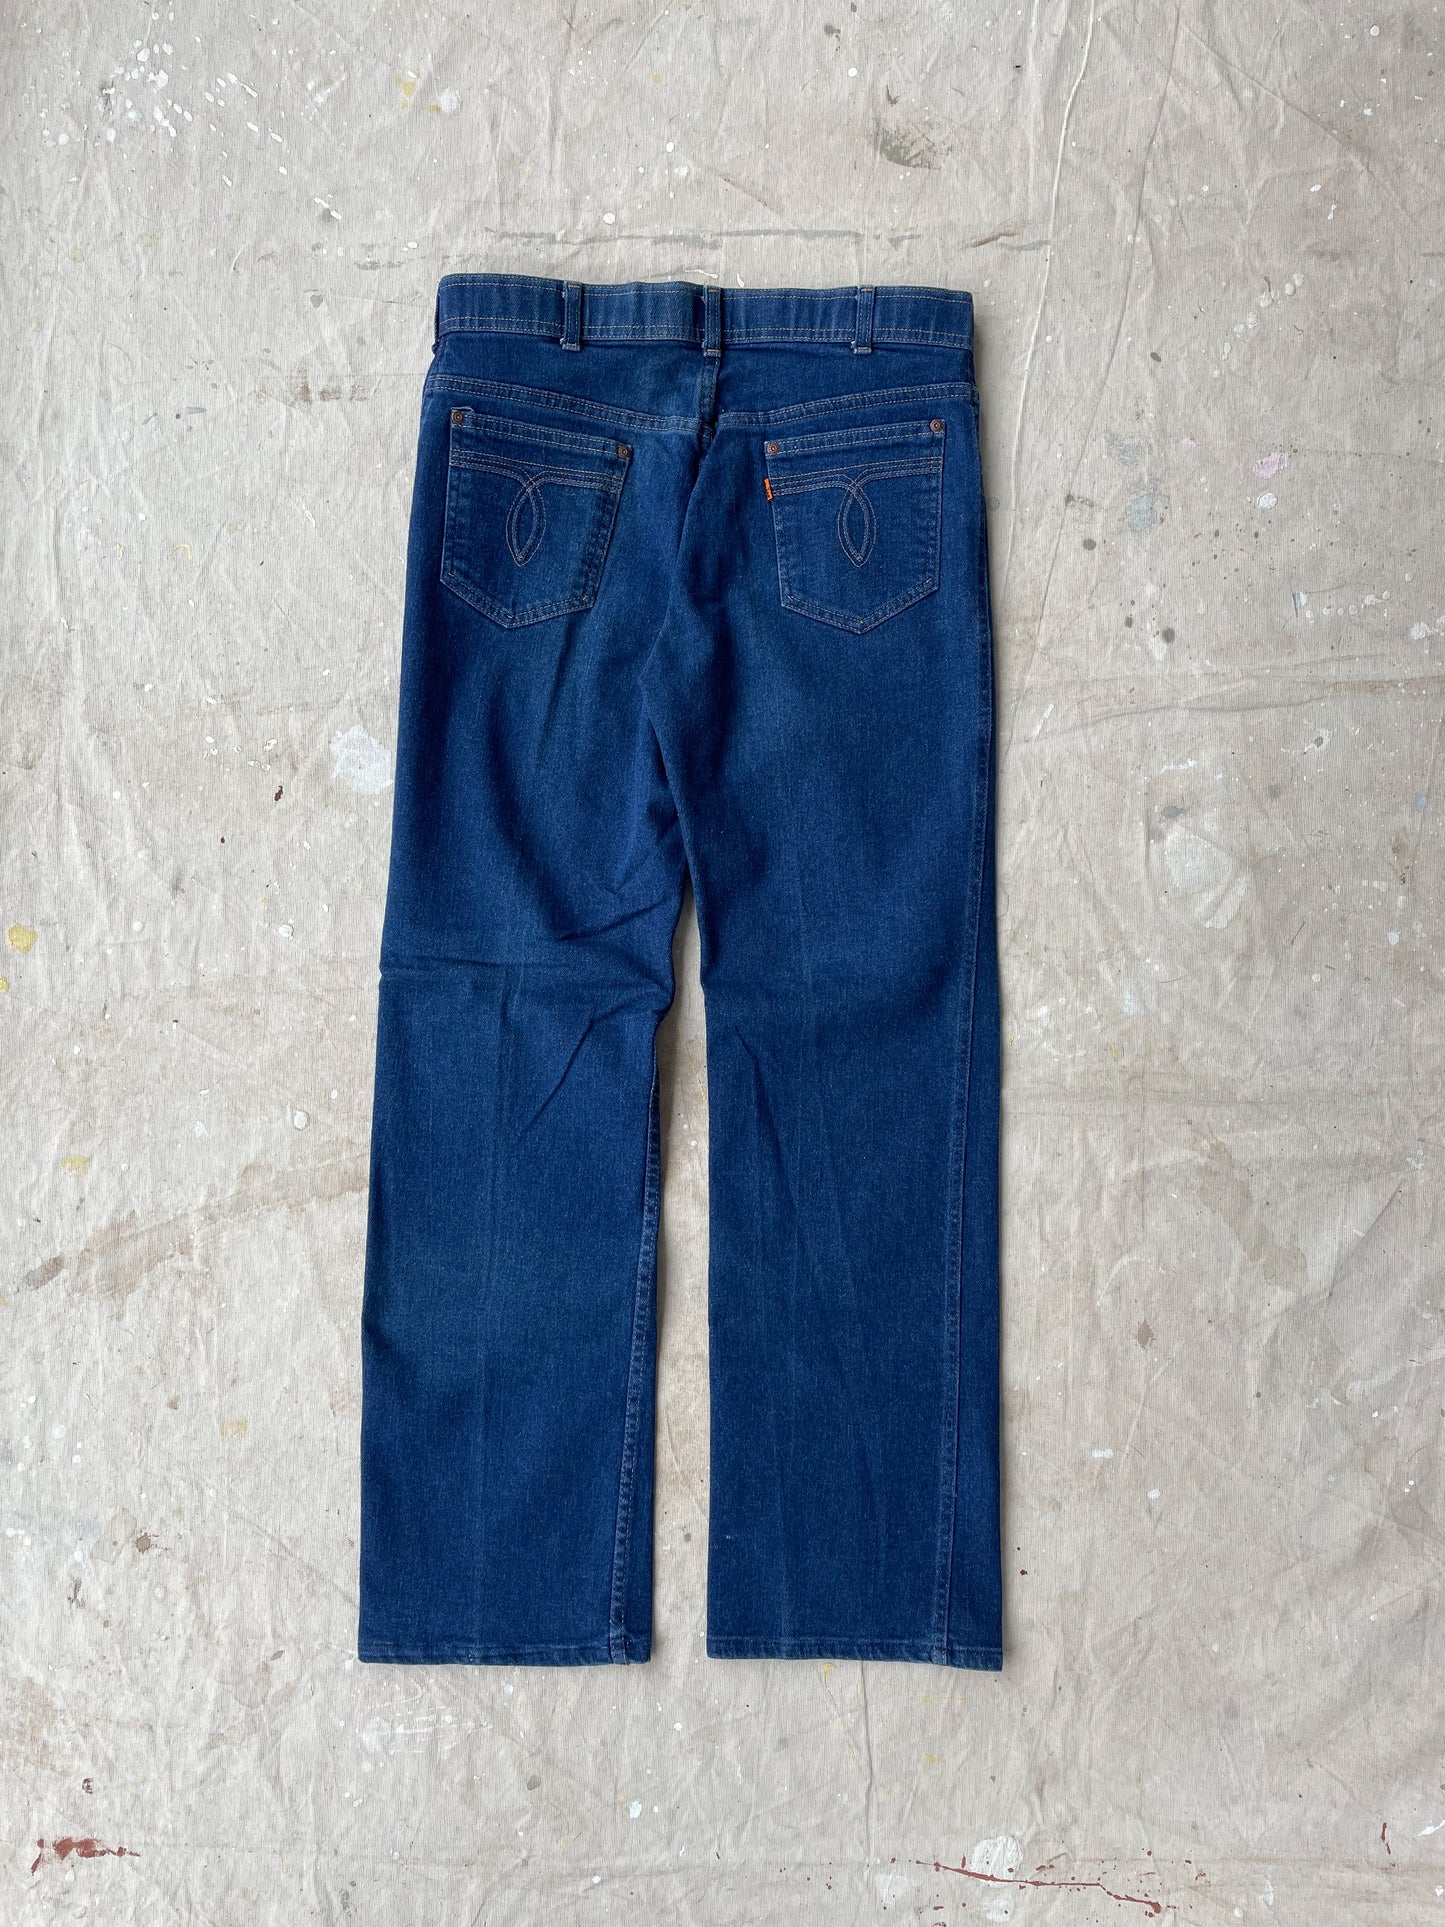 70's Levi's Orange Tab Jeans—[32x32]